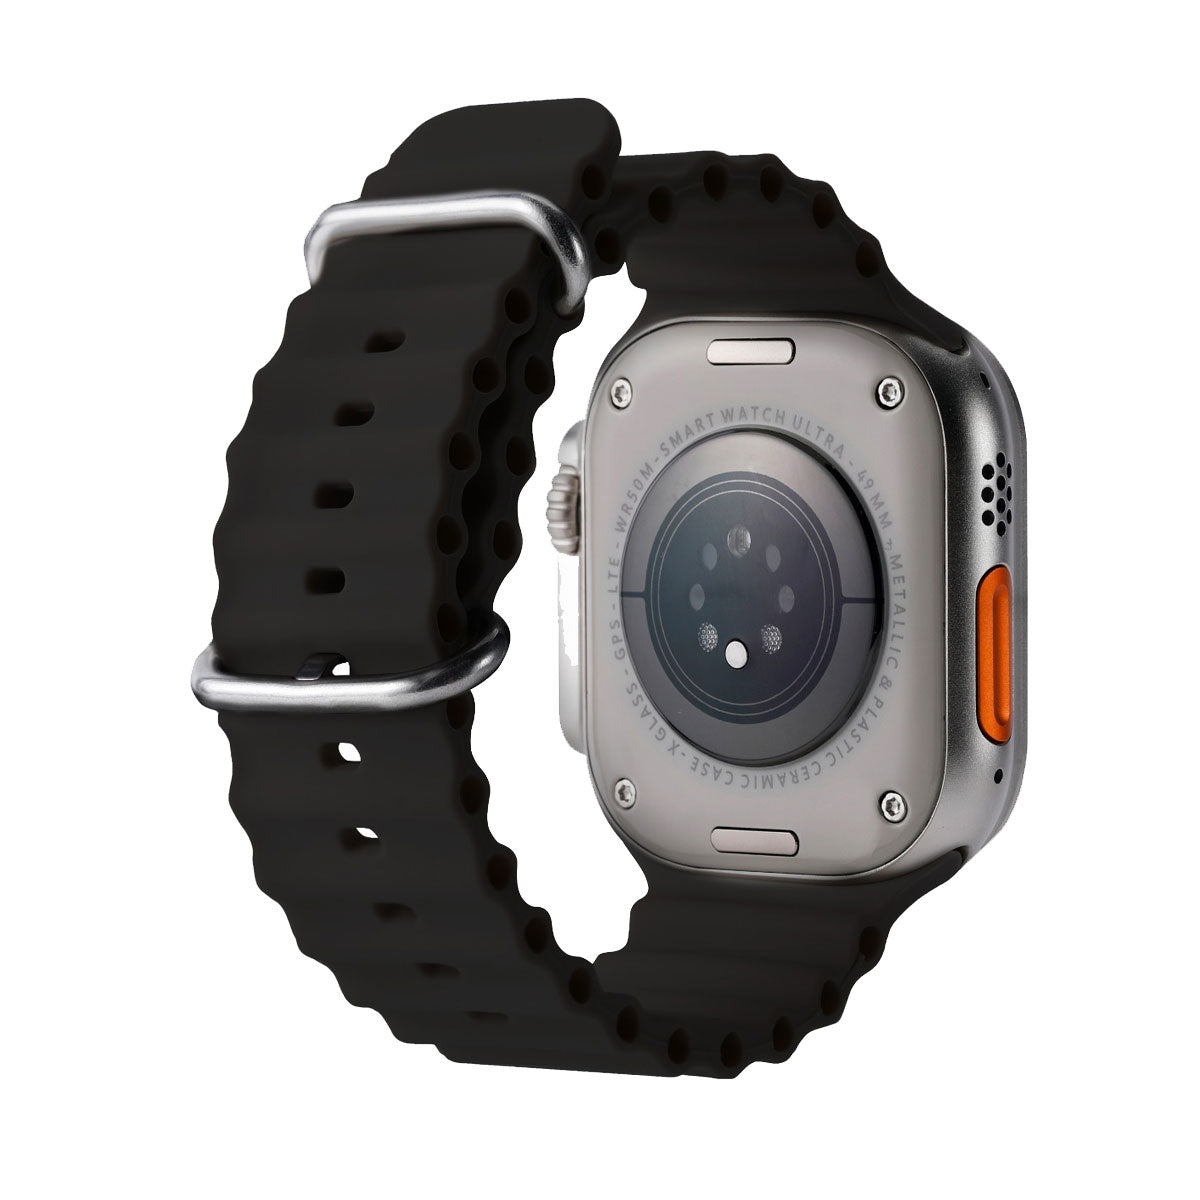 Smartwatch Reloj Hello Watch 3 Plus Fralugio 4gb Rom Mp3 Nfc